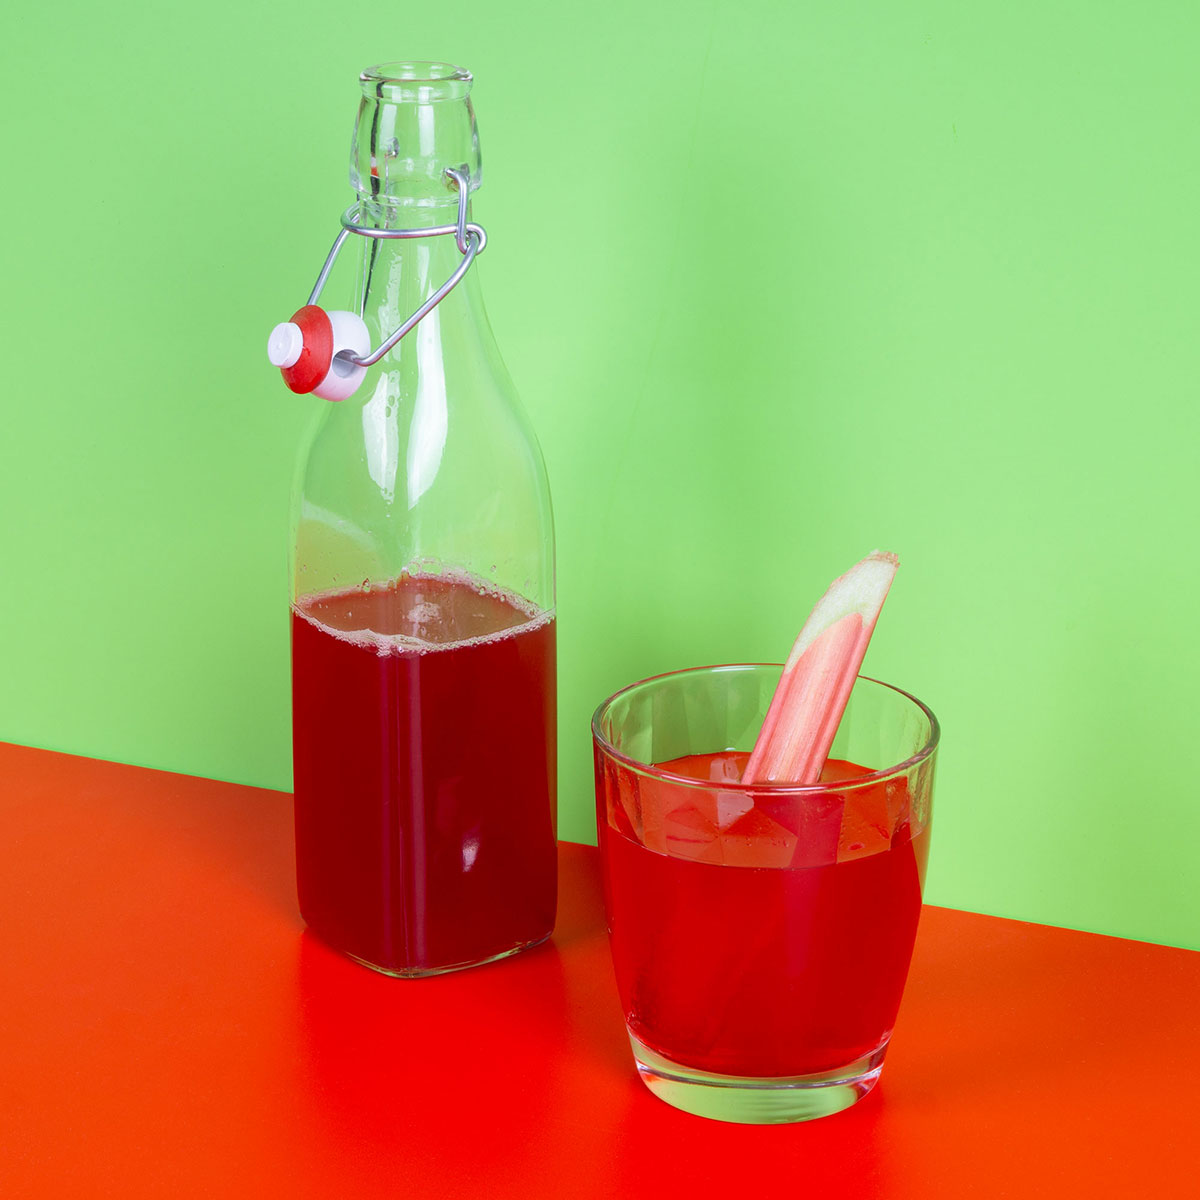 Rhubarb syrup (for lemonade)